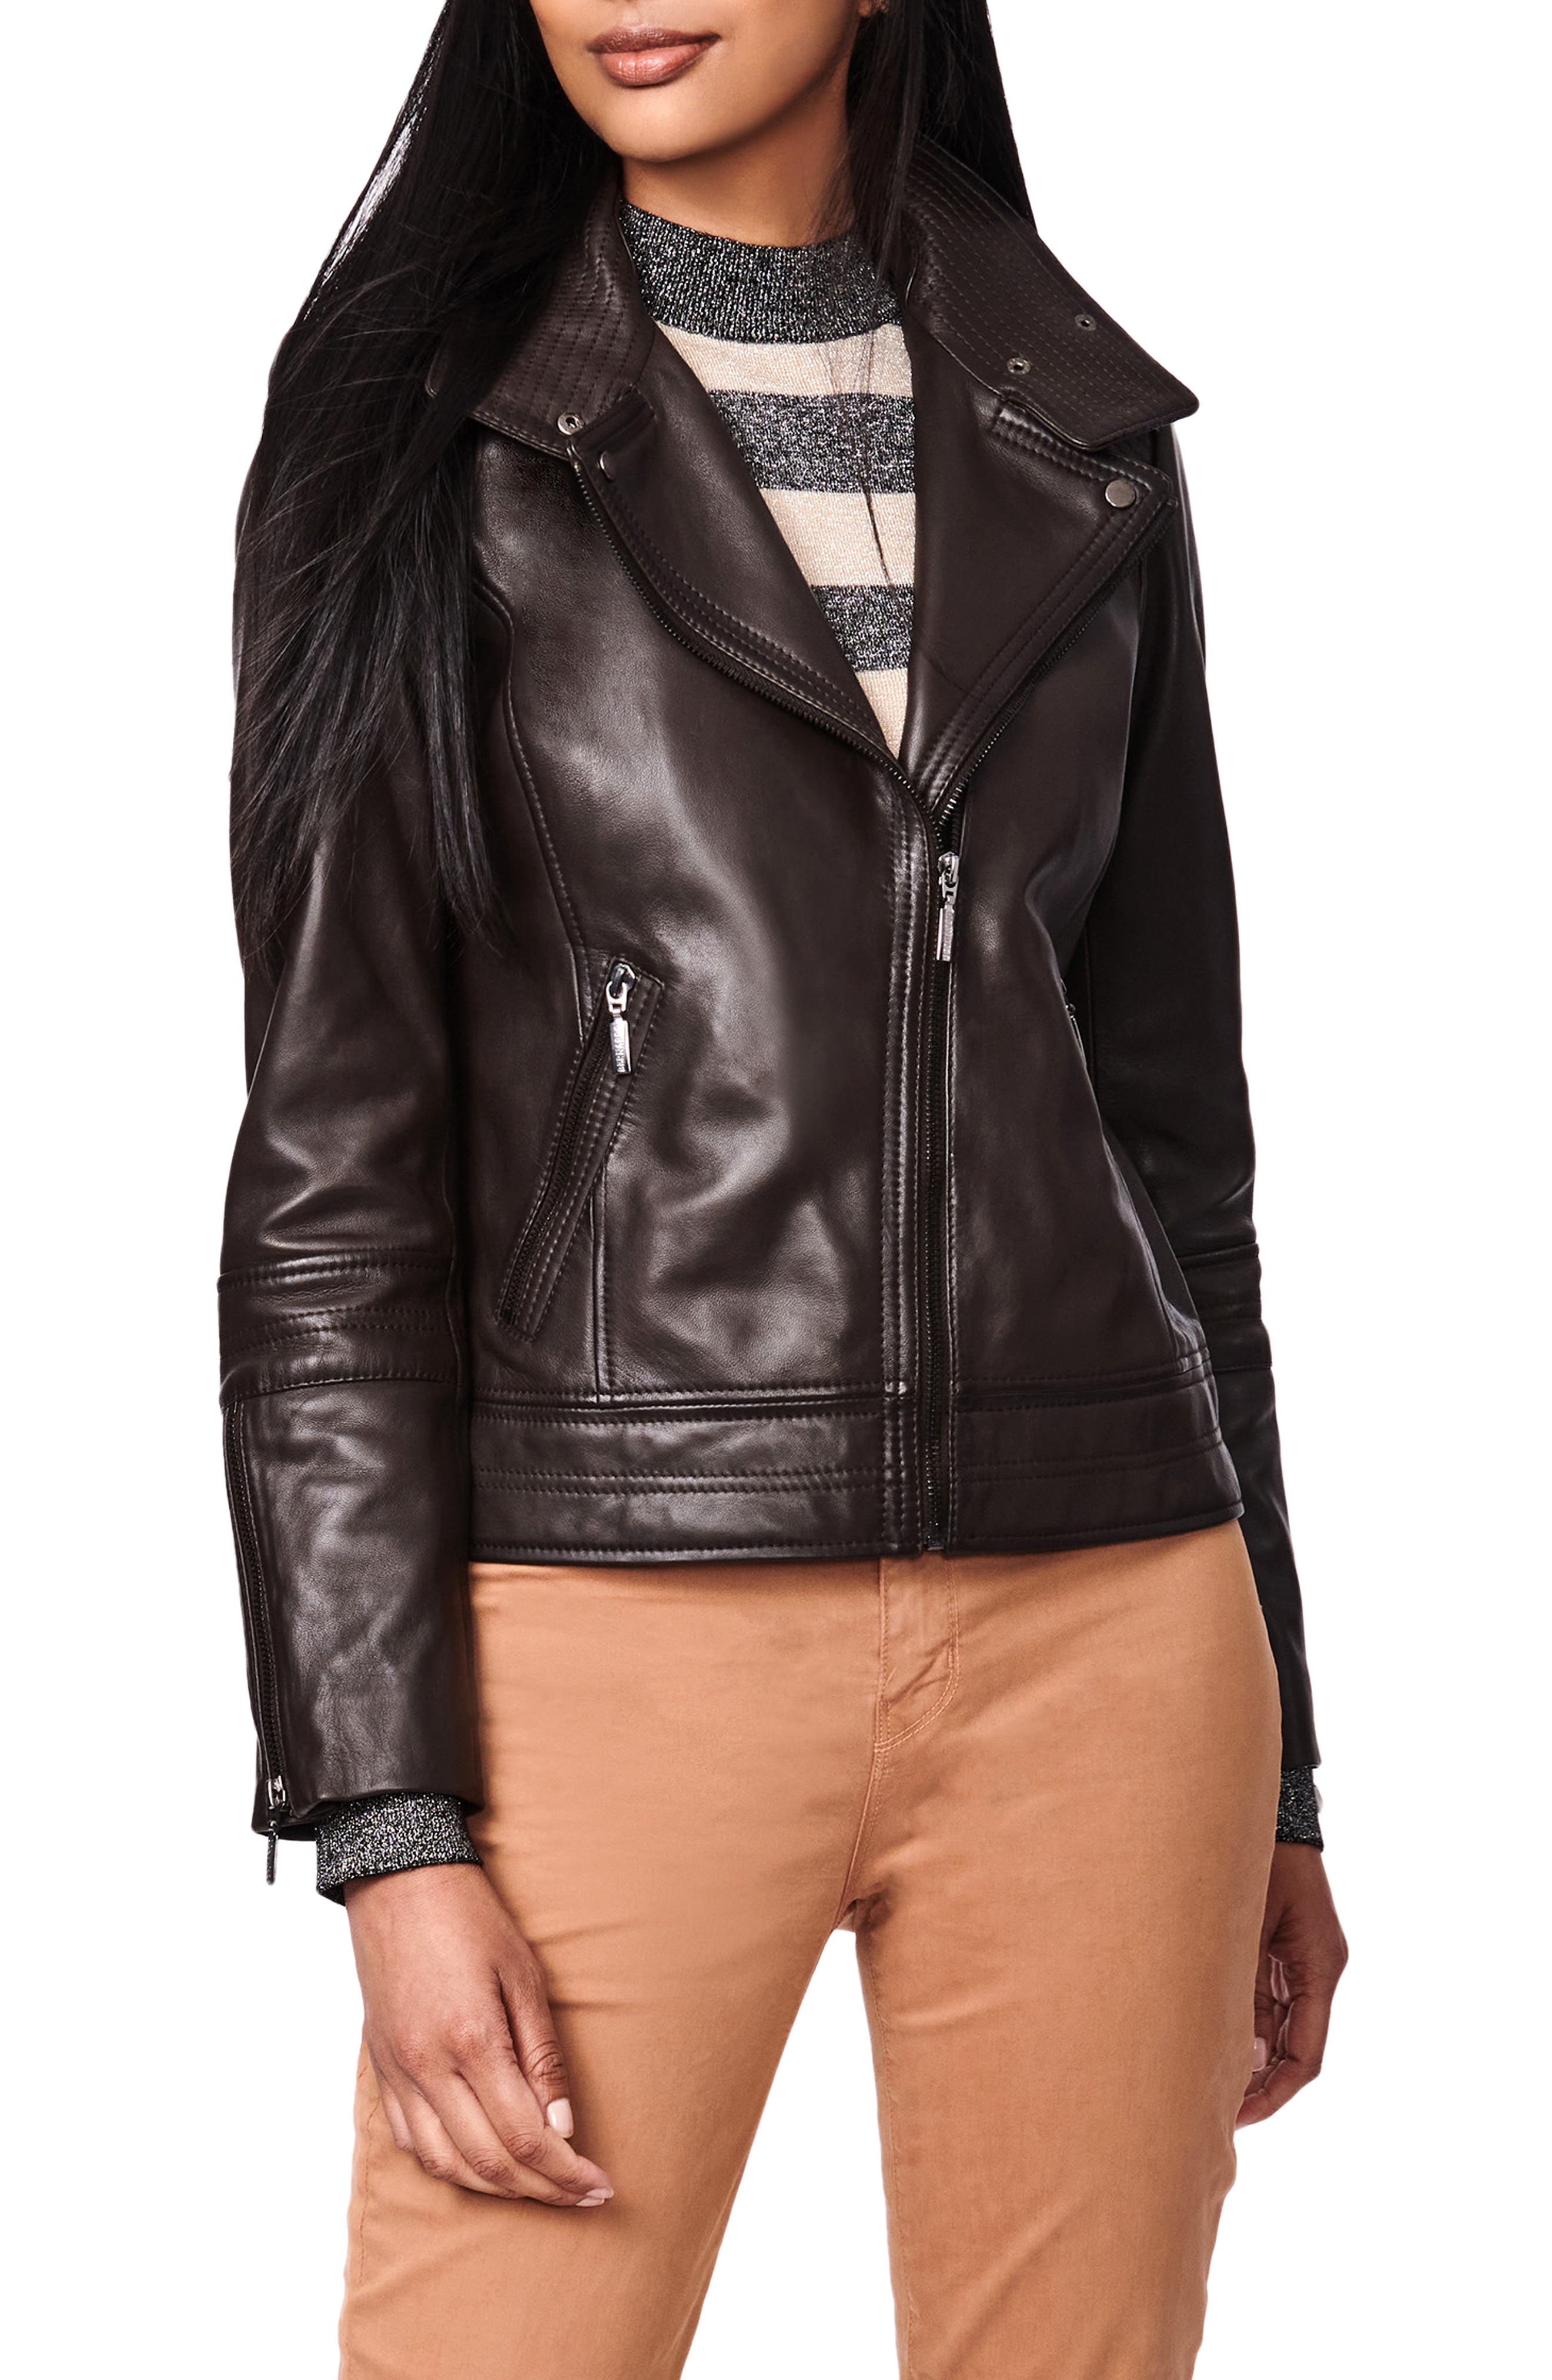 Zara vest discount 50% WOMEN FASHION Jackets Vest Party Gray/Brown M 